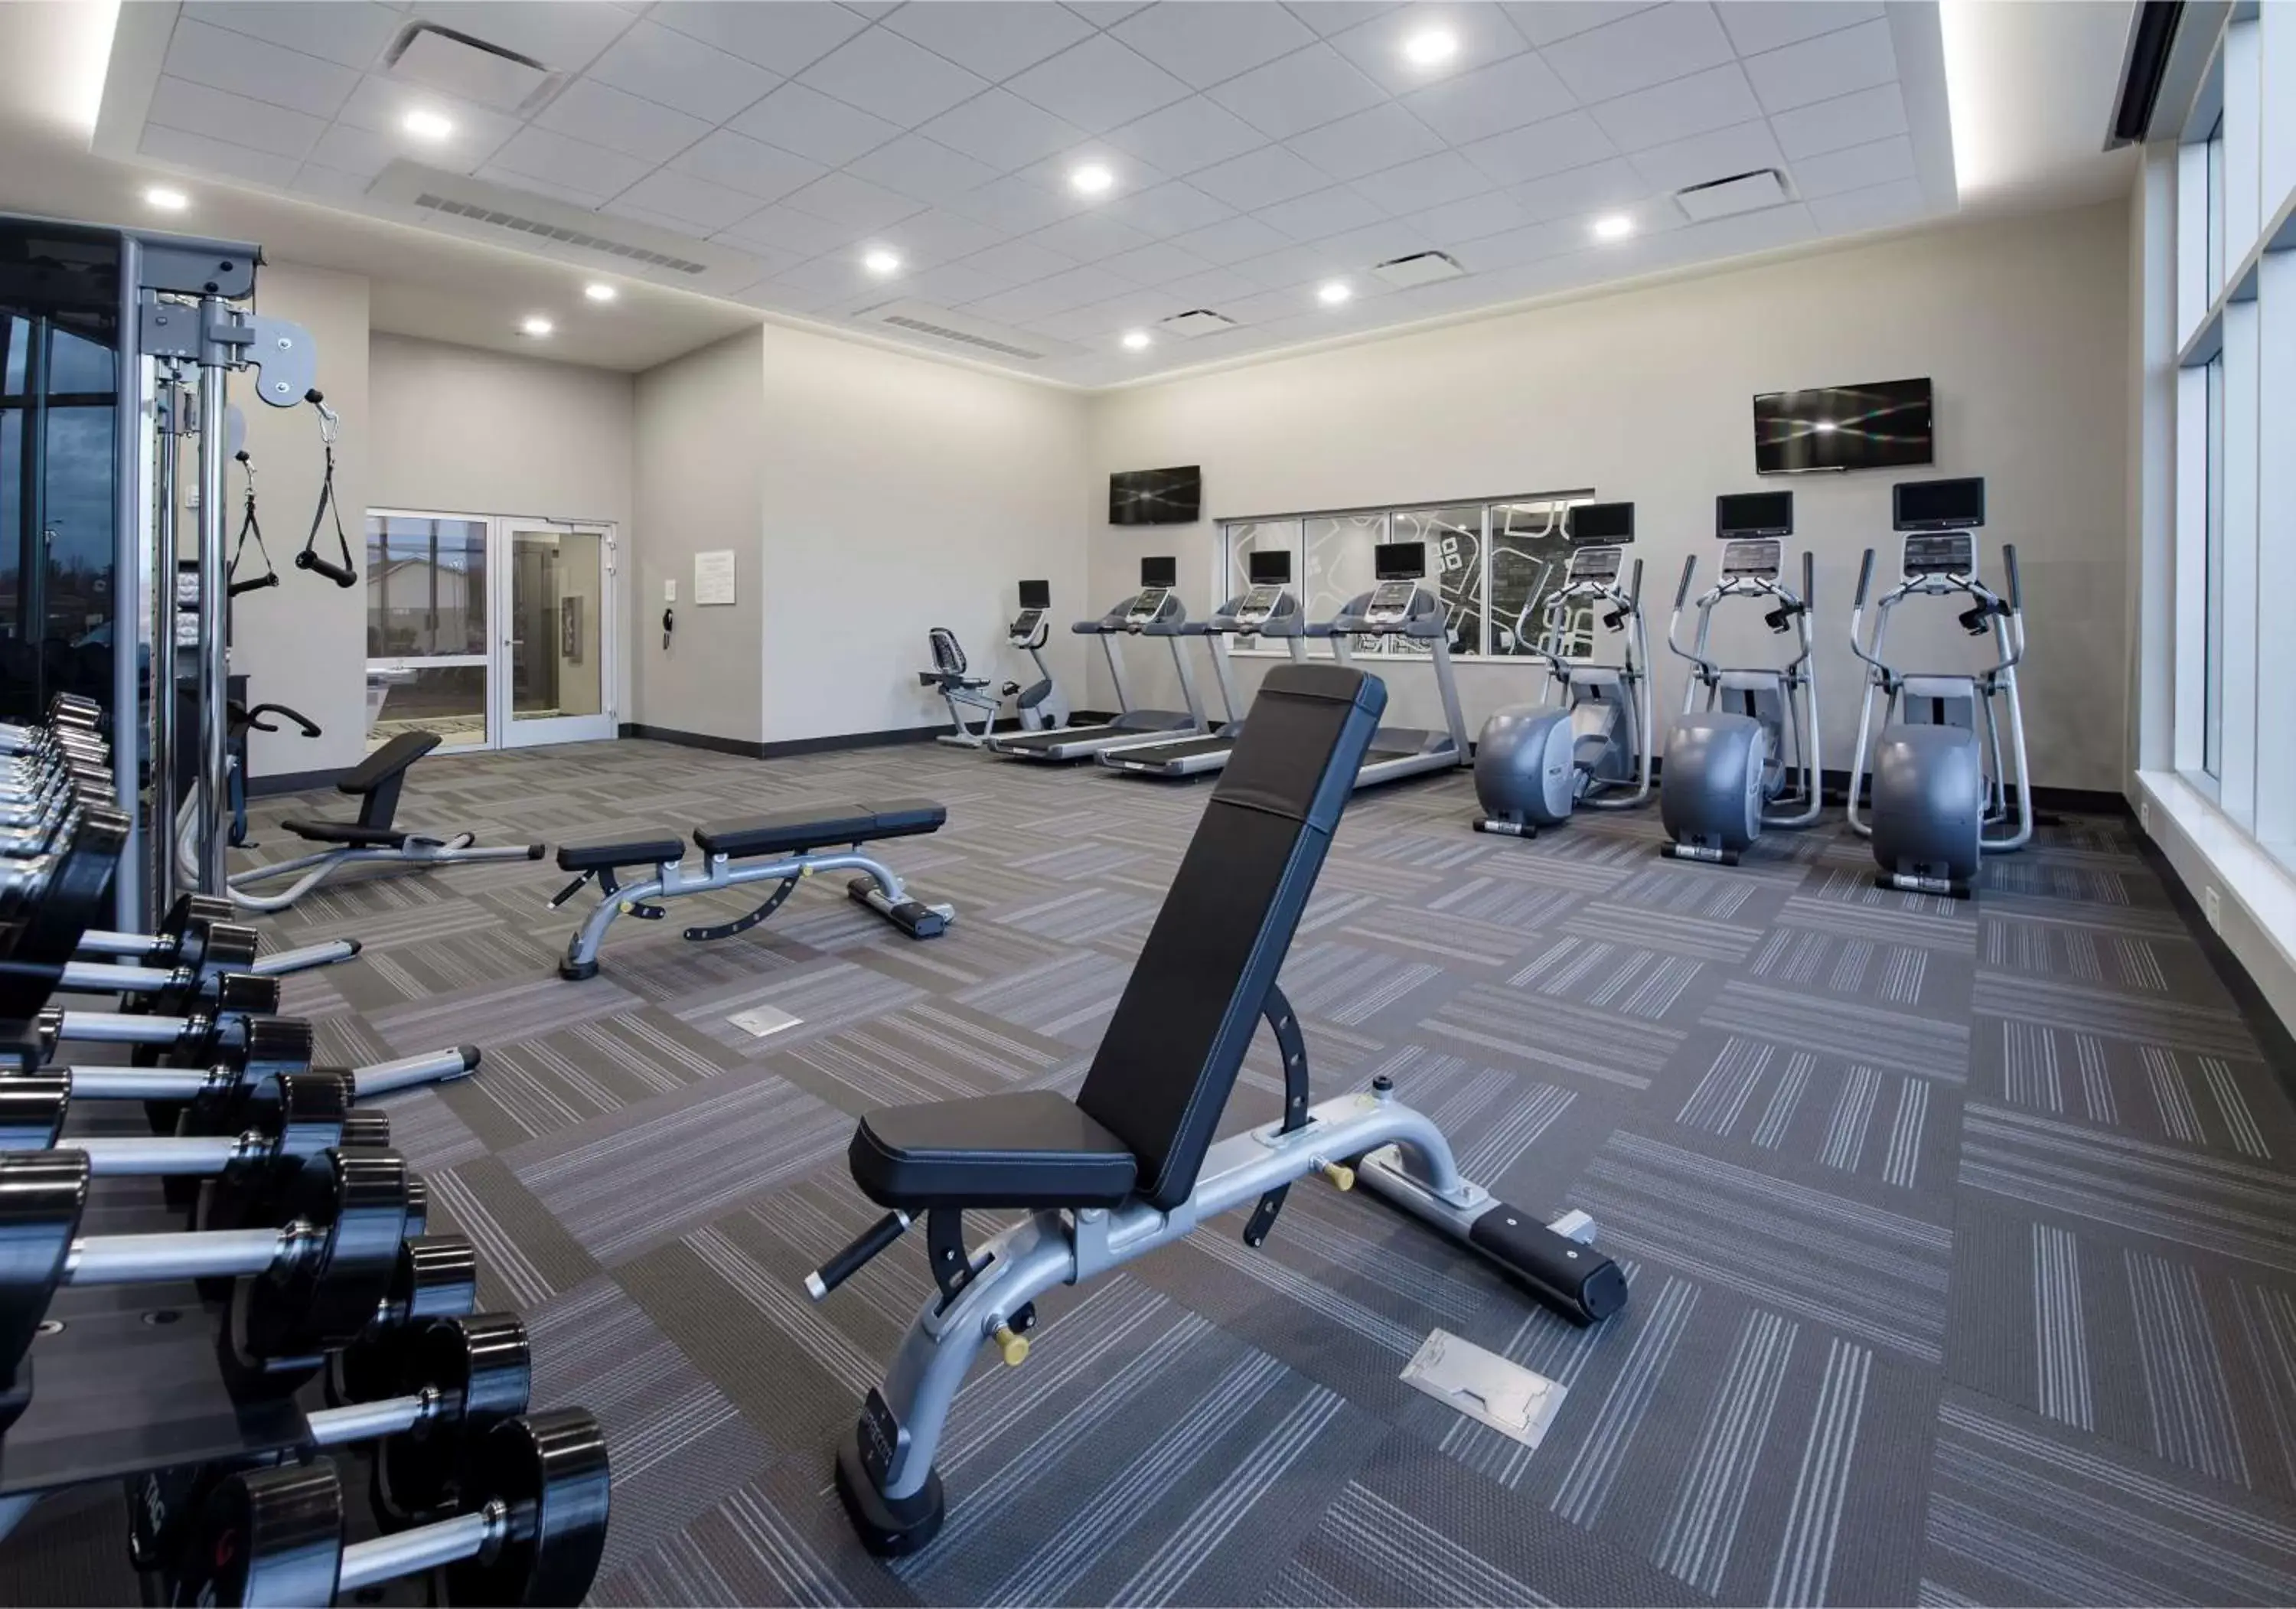 Fitness centre/facilities, Fitness Center/Facilities in Hilton Garden Inn Wausau, WI